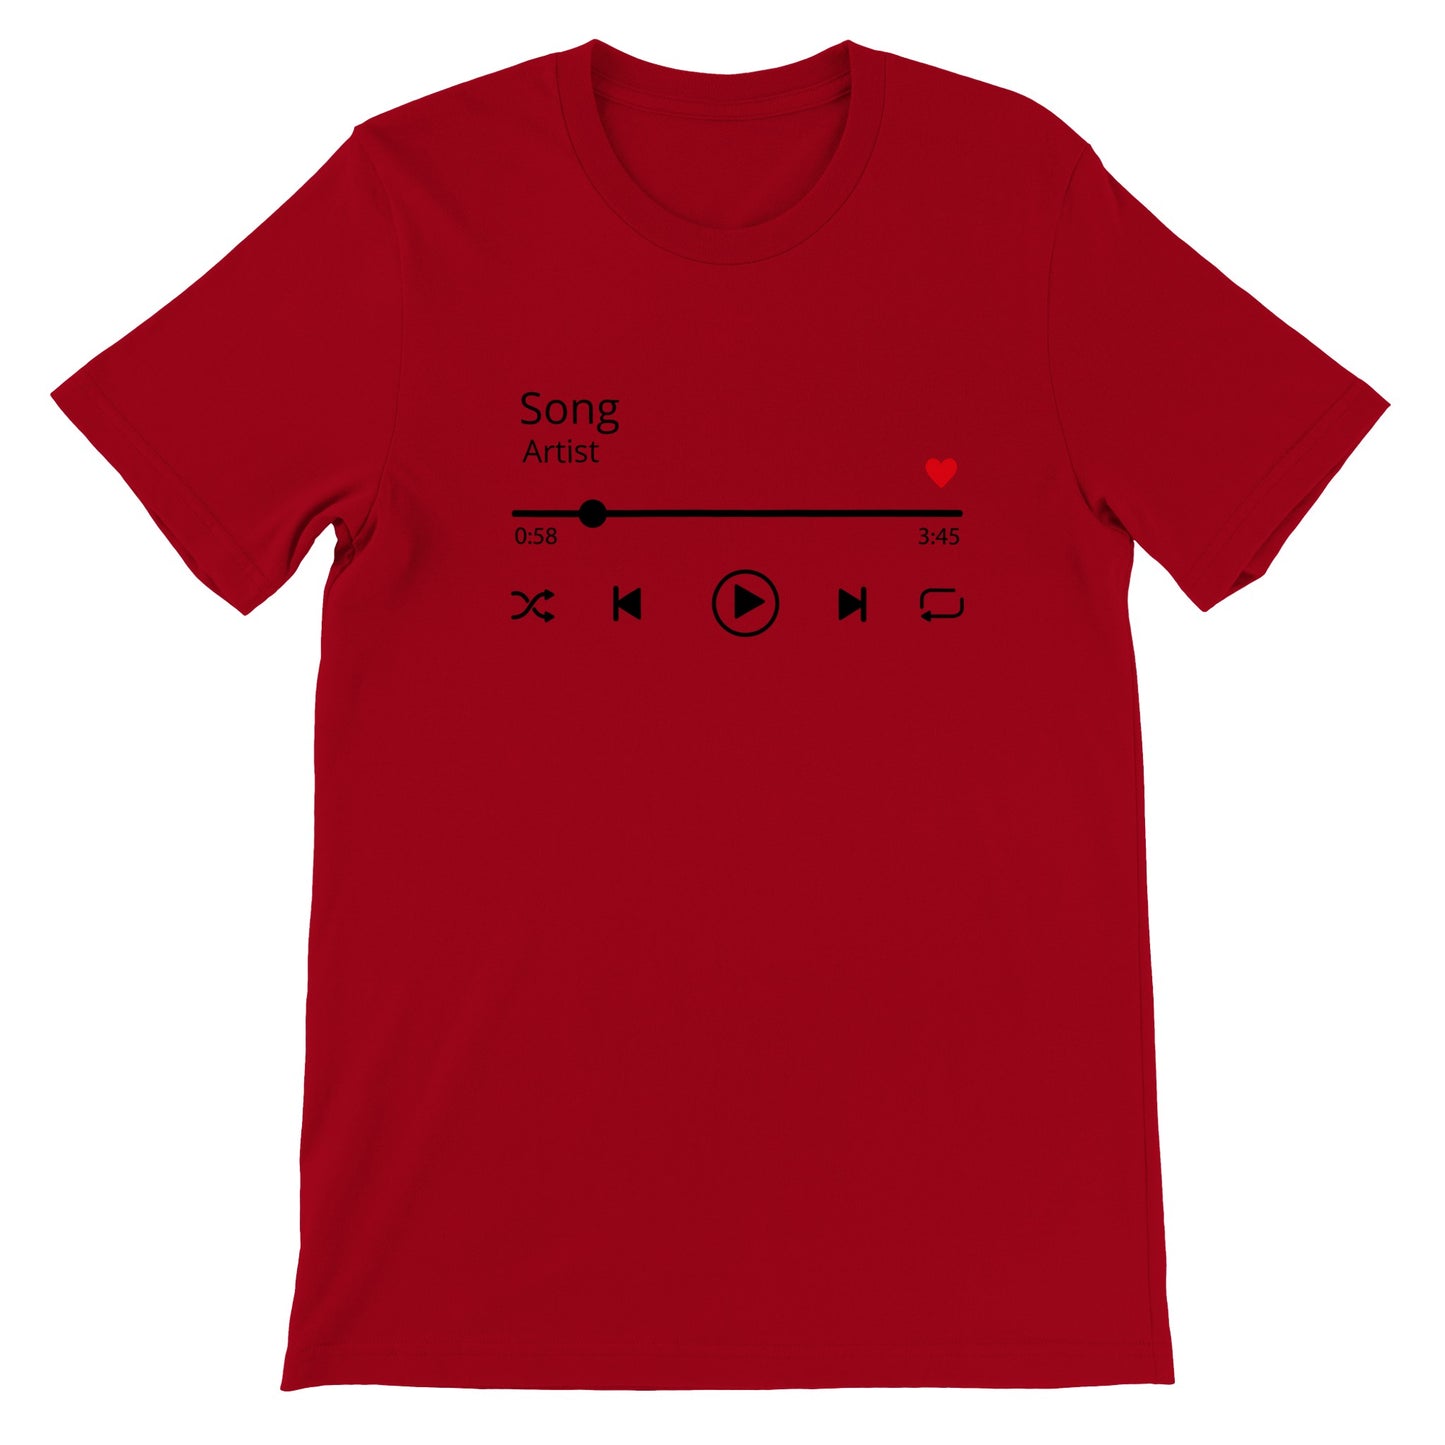 Musik T-shirt - Your Favorite Music Song and Artist Player T-shirt - Premium Unisex T-shirt